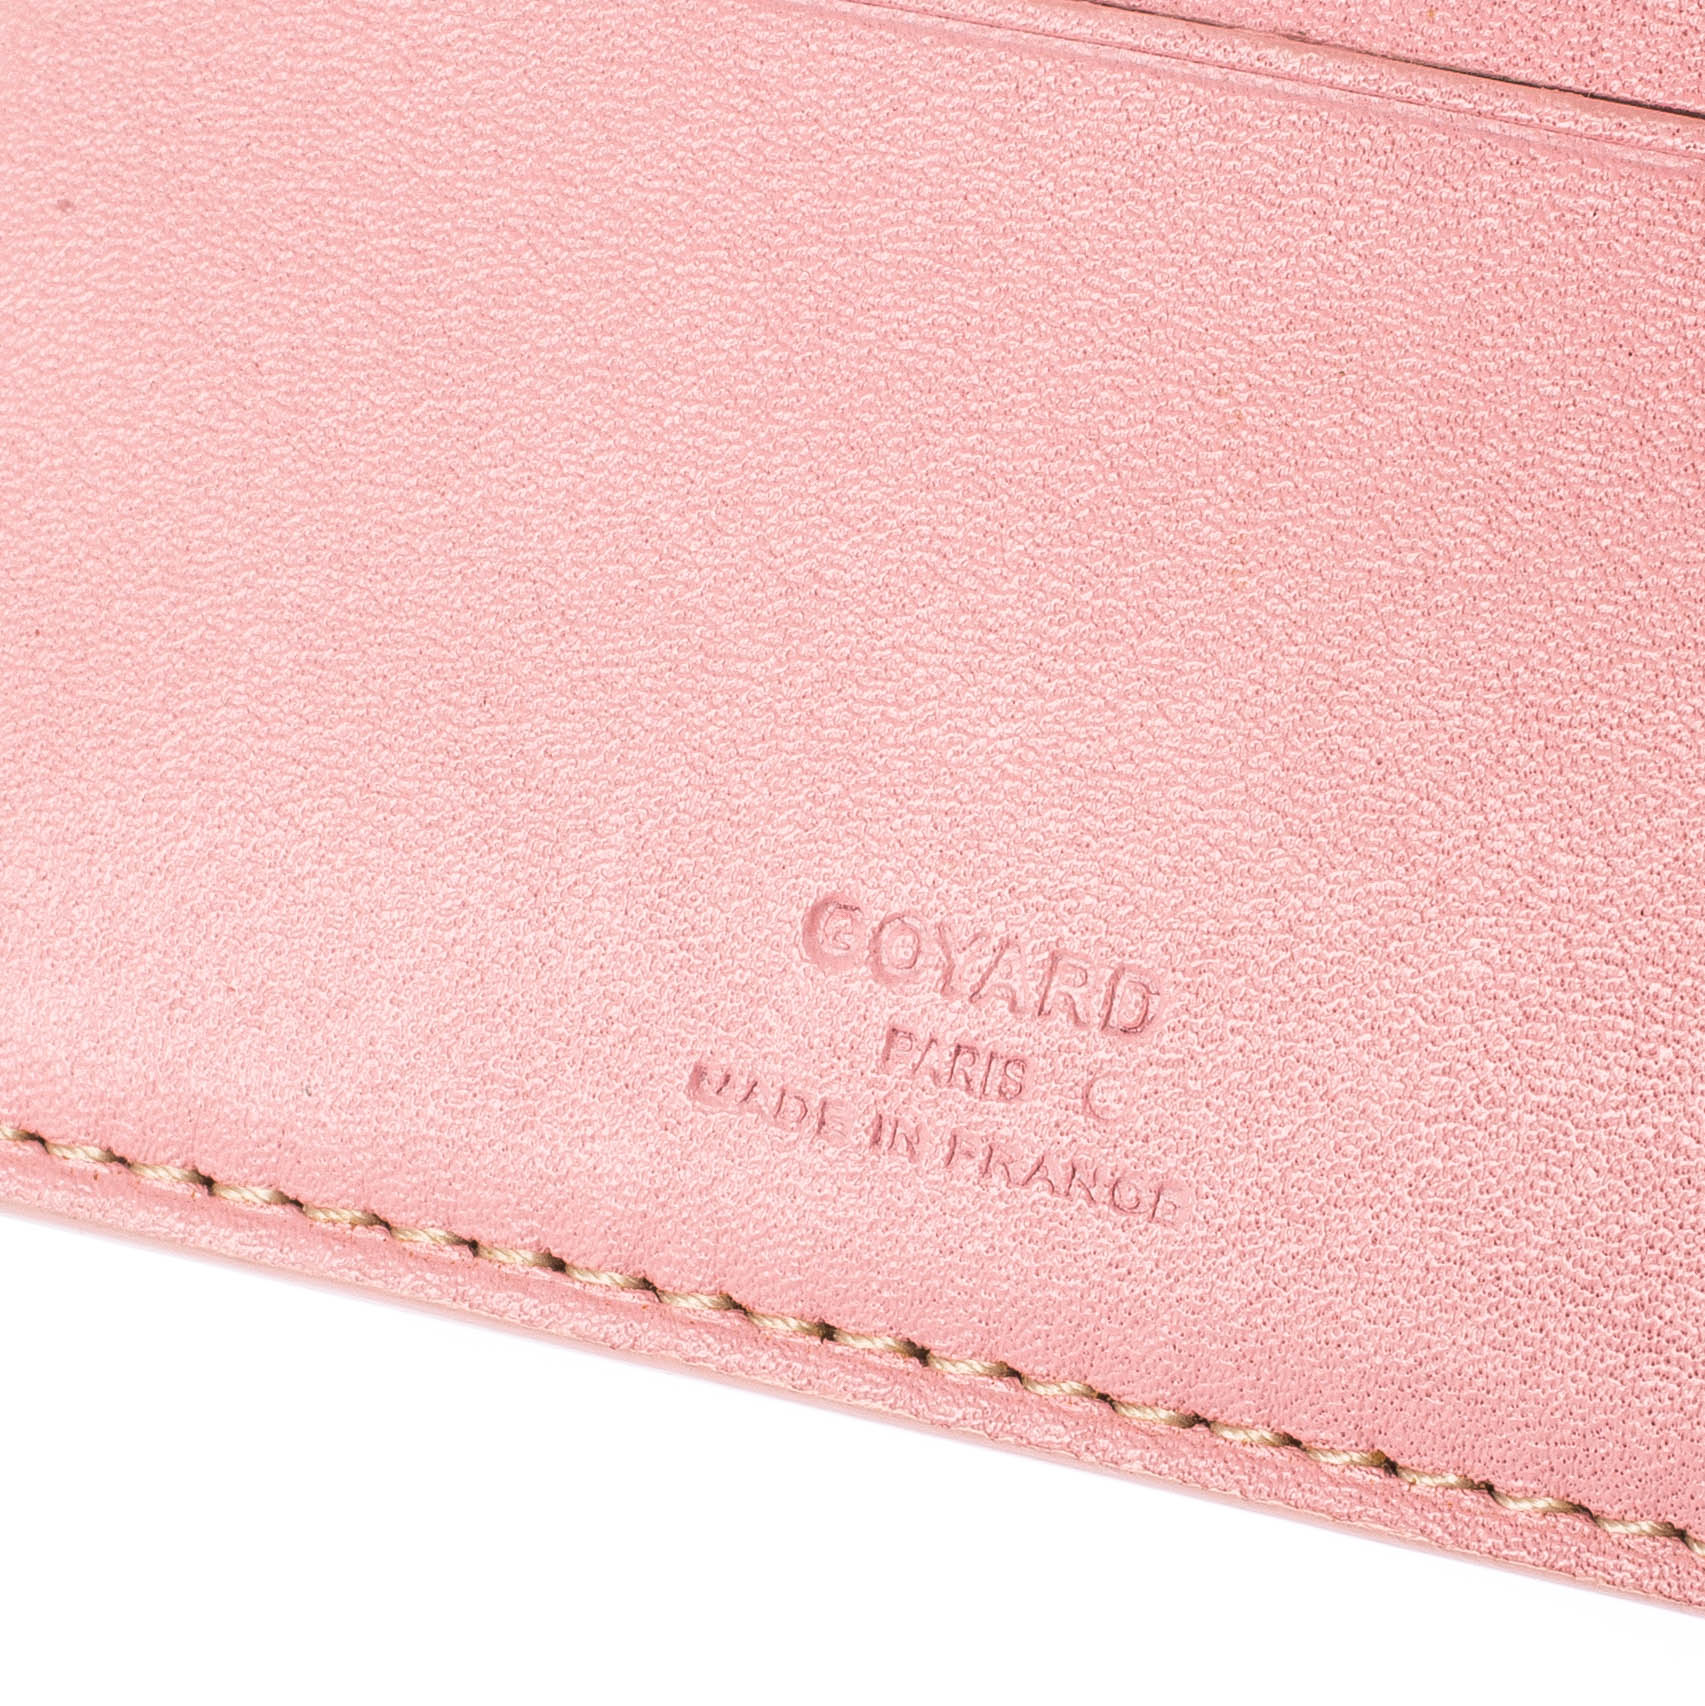 Pink goyard wallet , #wallet #pink #goyard #fashion